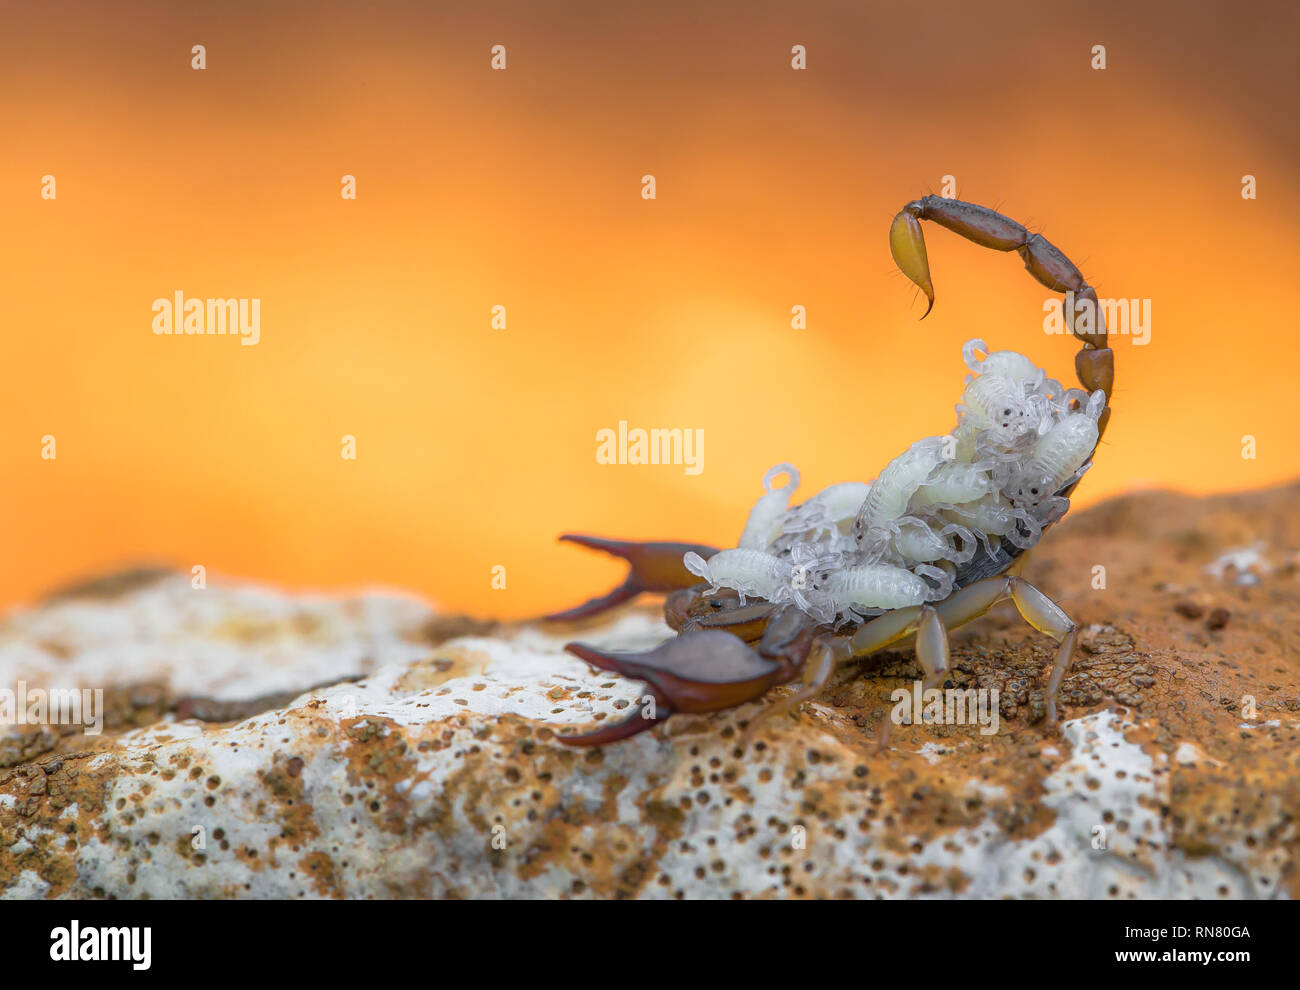 Small harmless Scorpion Euscorpius sp. with offspring in Croatia Stock Photo